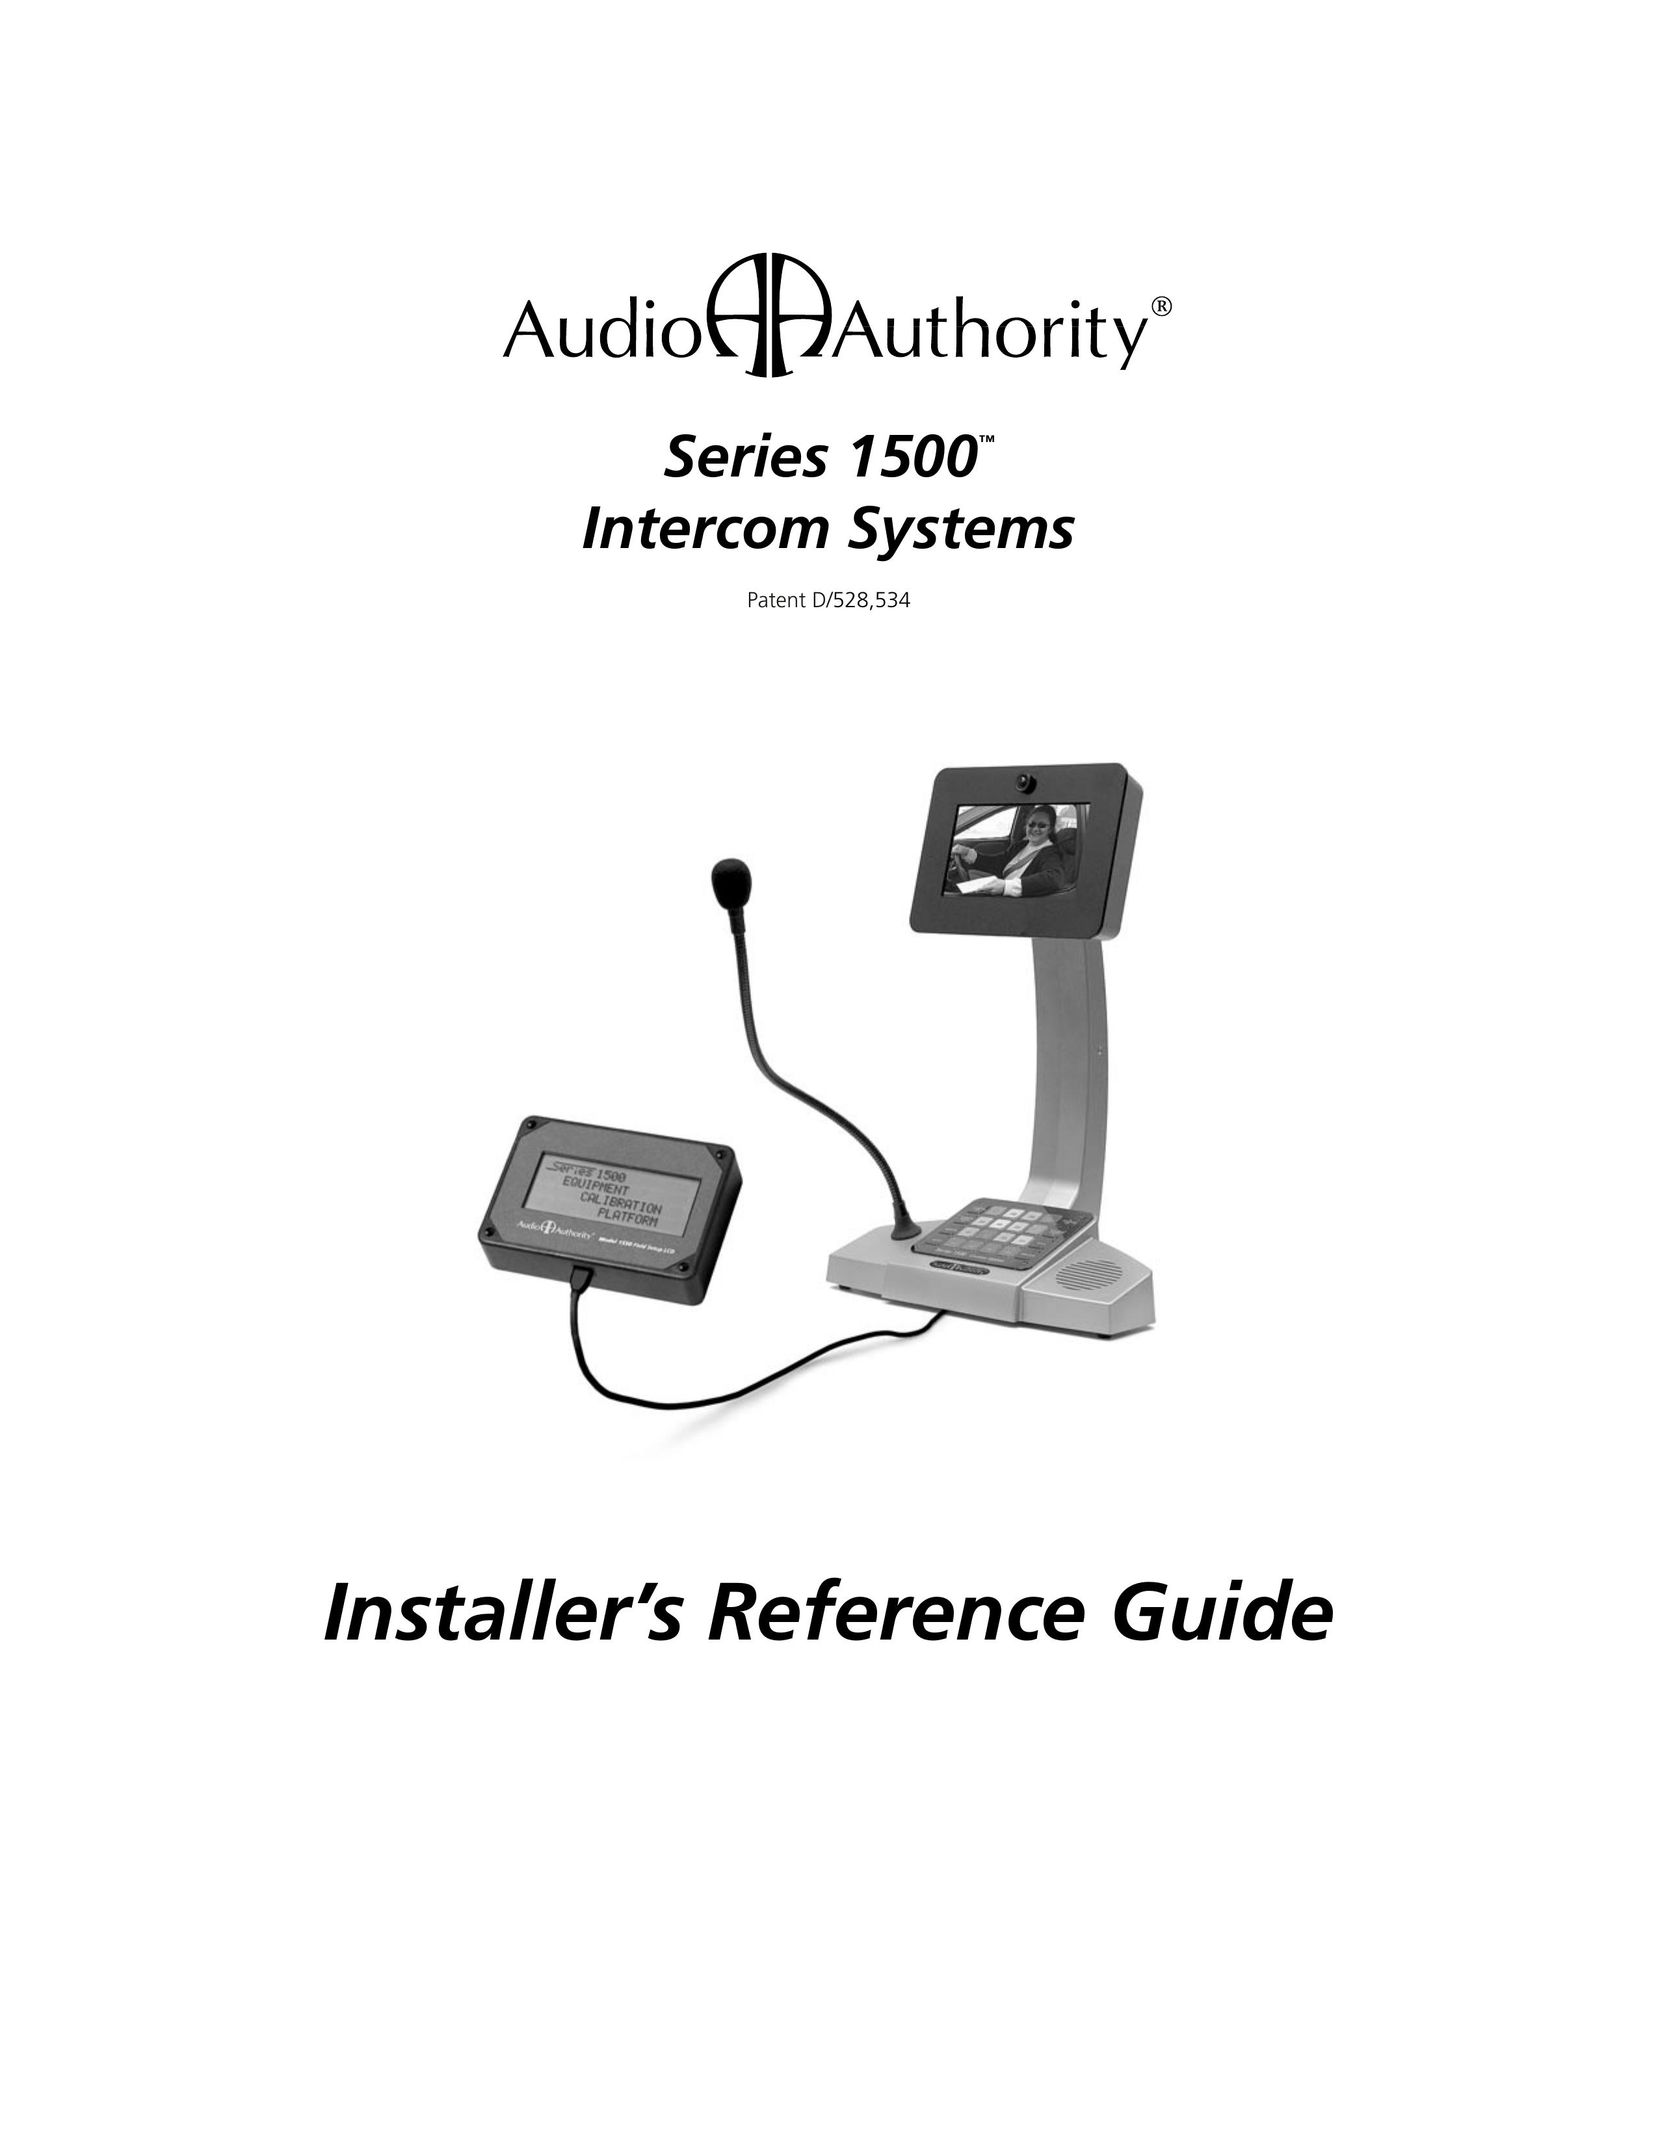 Audio Authority Series 1500 Intercom System User Manual